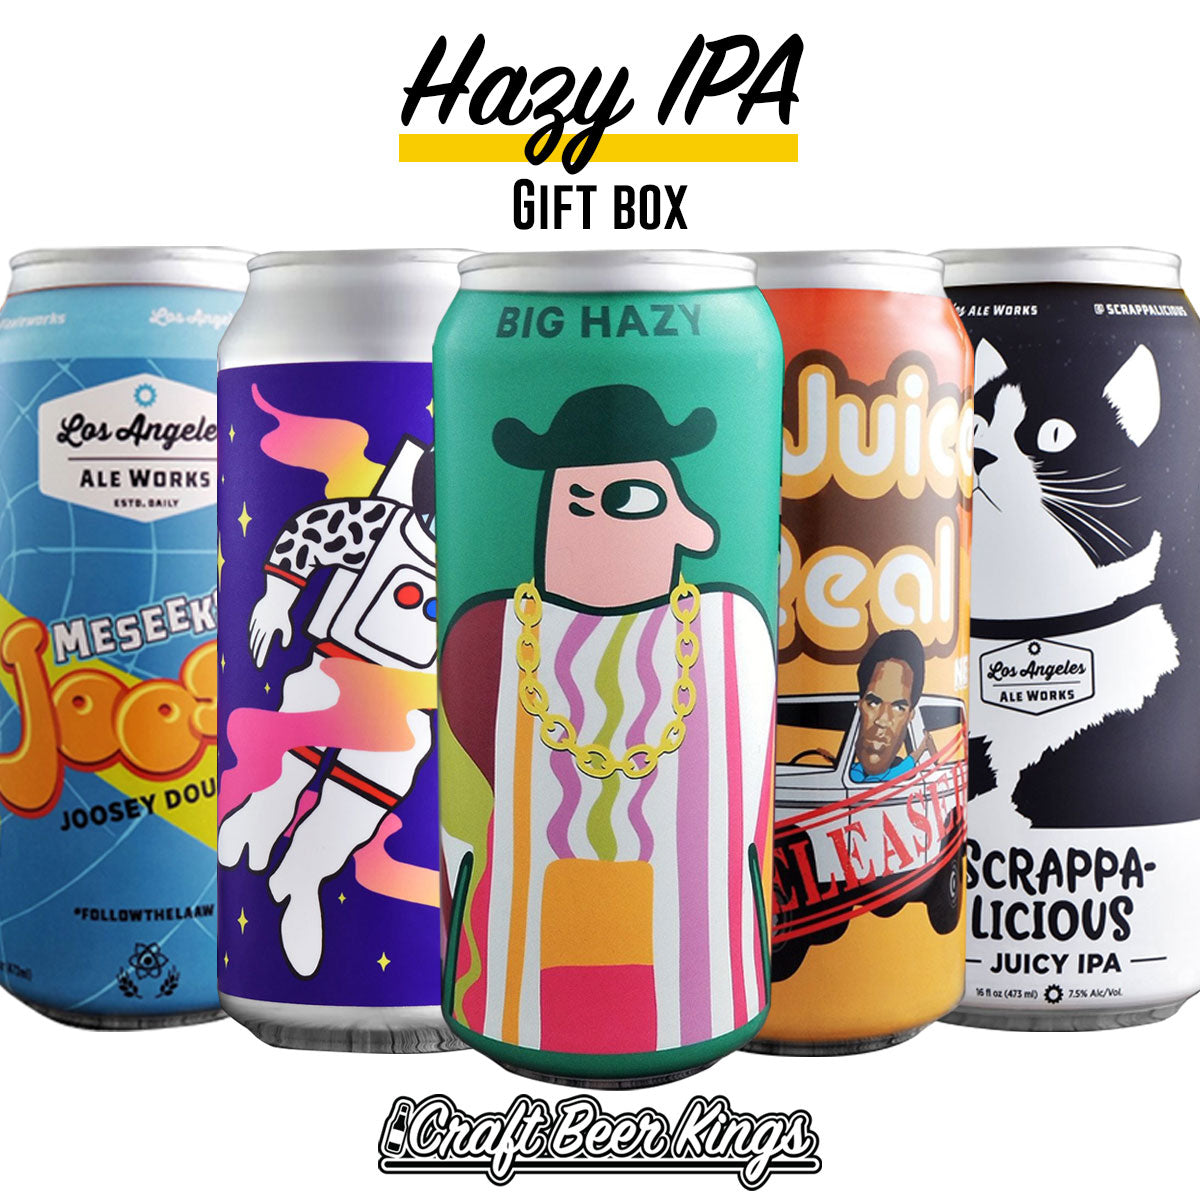 Hazy IPA Gift Box - Shipping Included!